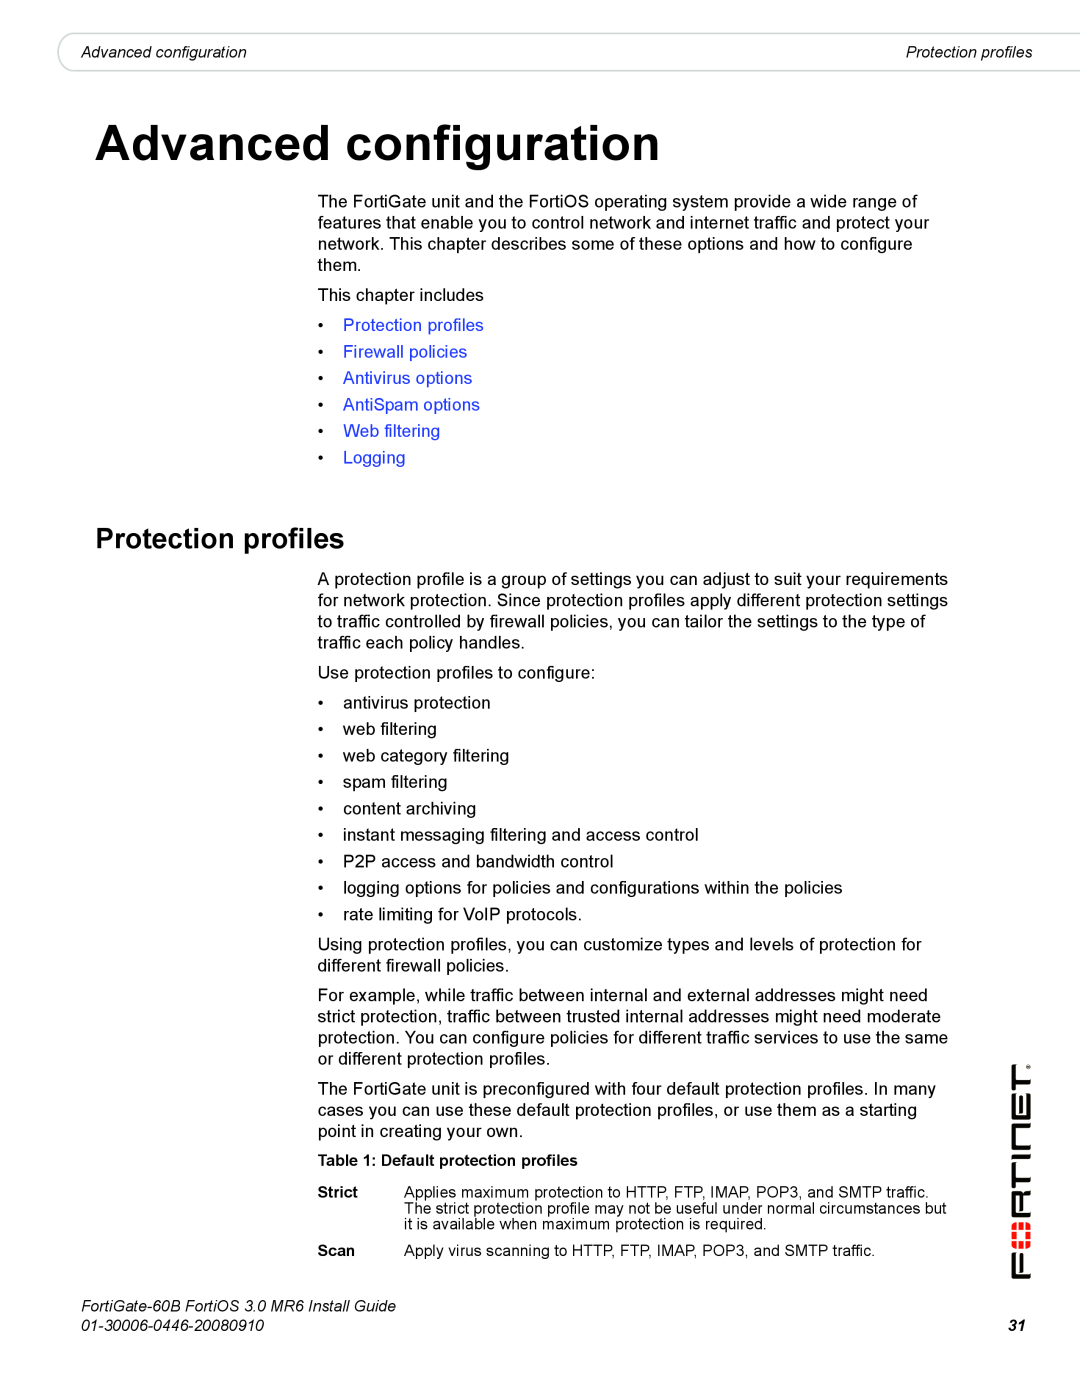 Fortinet 60B manual Advanced configuration, Protection profiles Firewall policies Antivirus options 